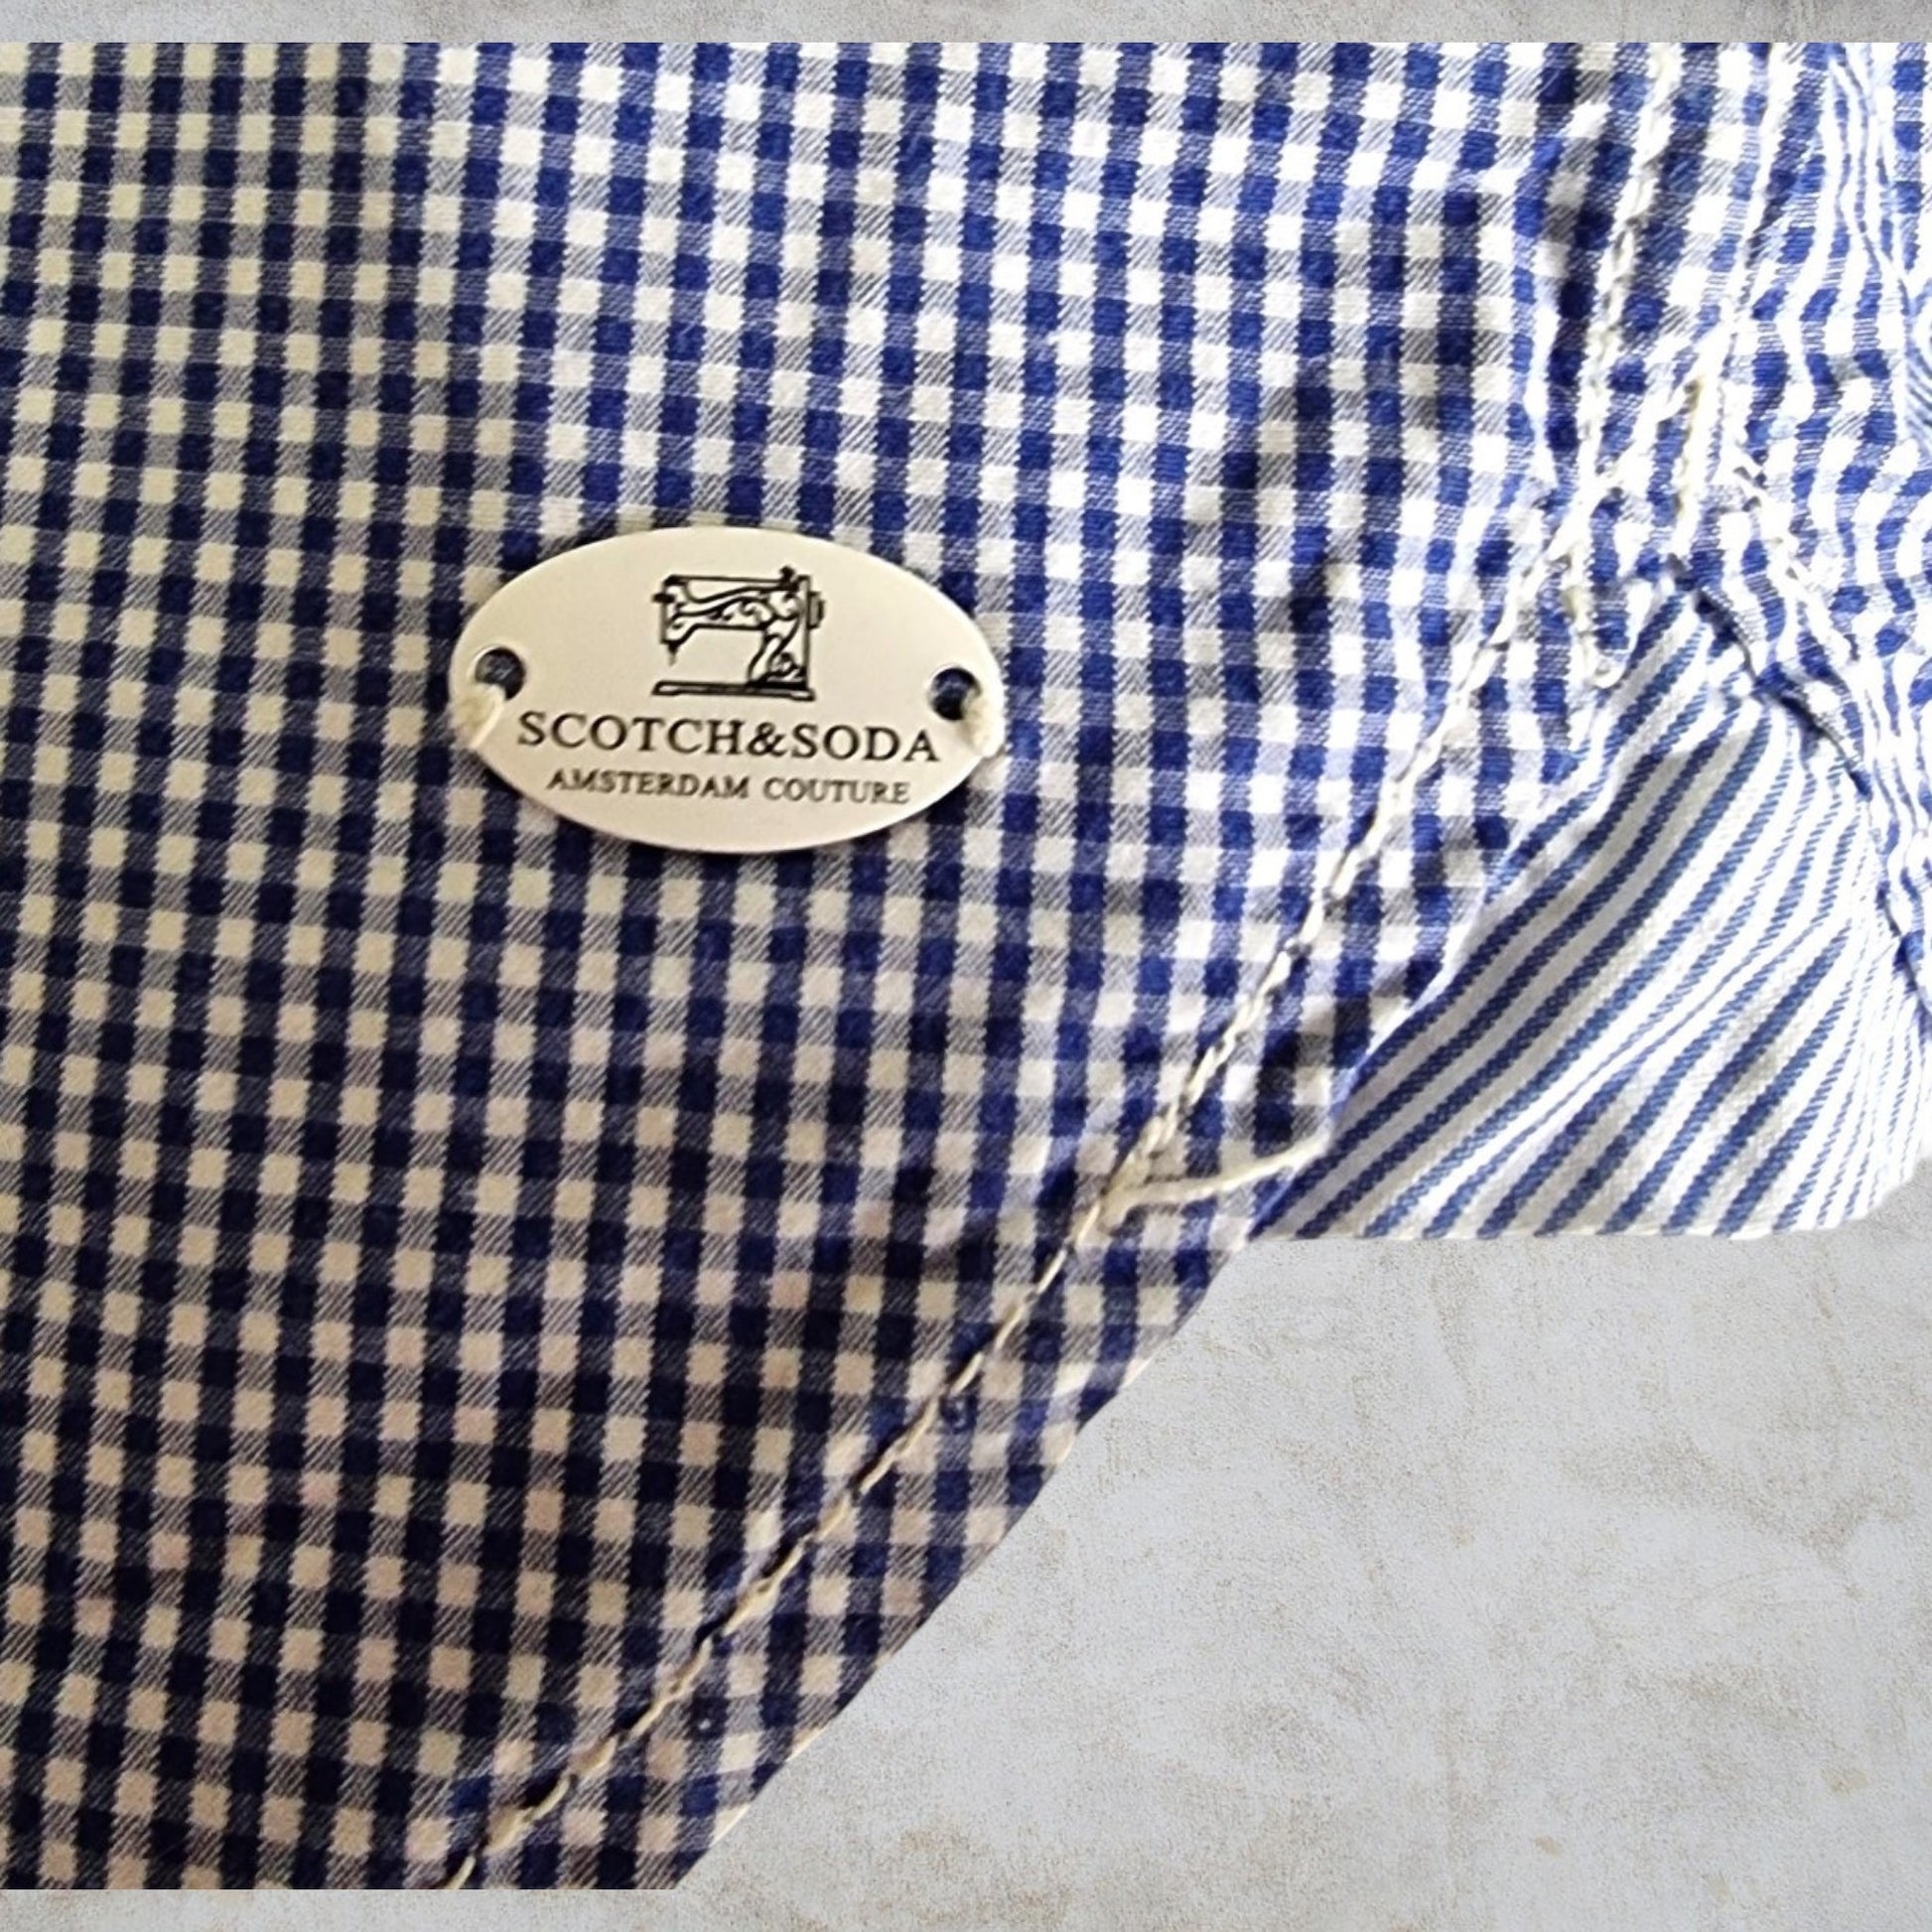 Scotch & Soda Blue & White Oxford Collar Cotton Check Mens Shirt Size M Timeless Fashions